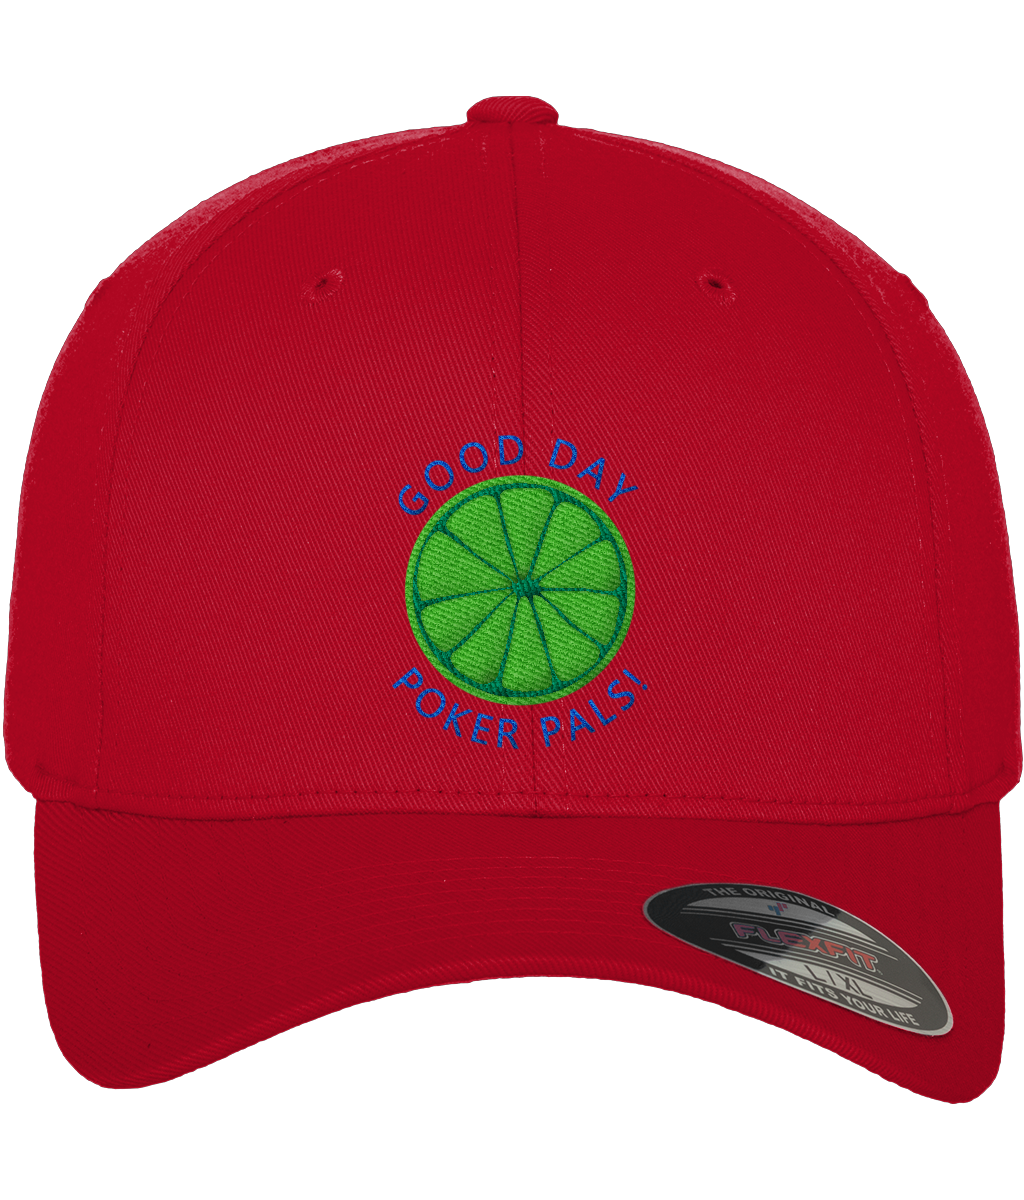 Limerickey Baseball Cap - Red